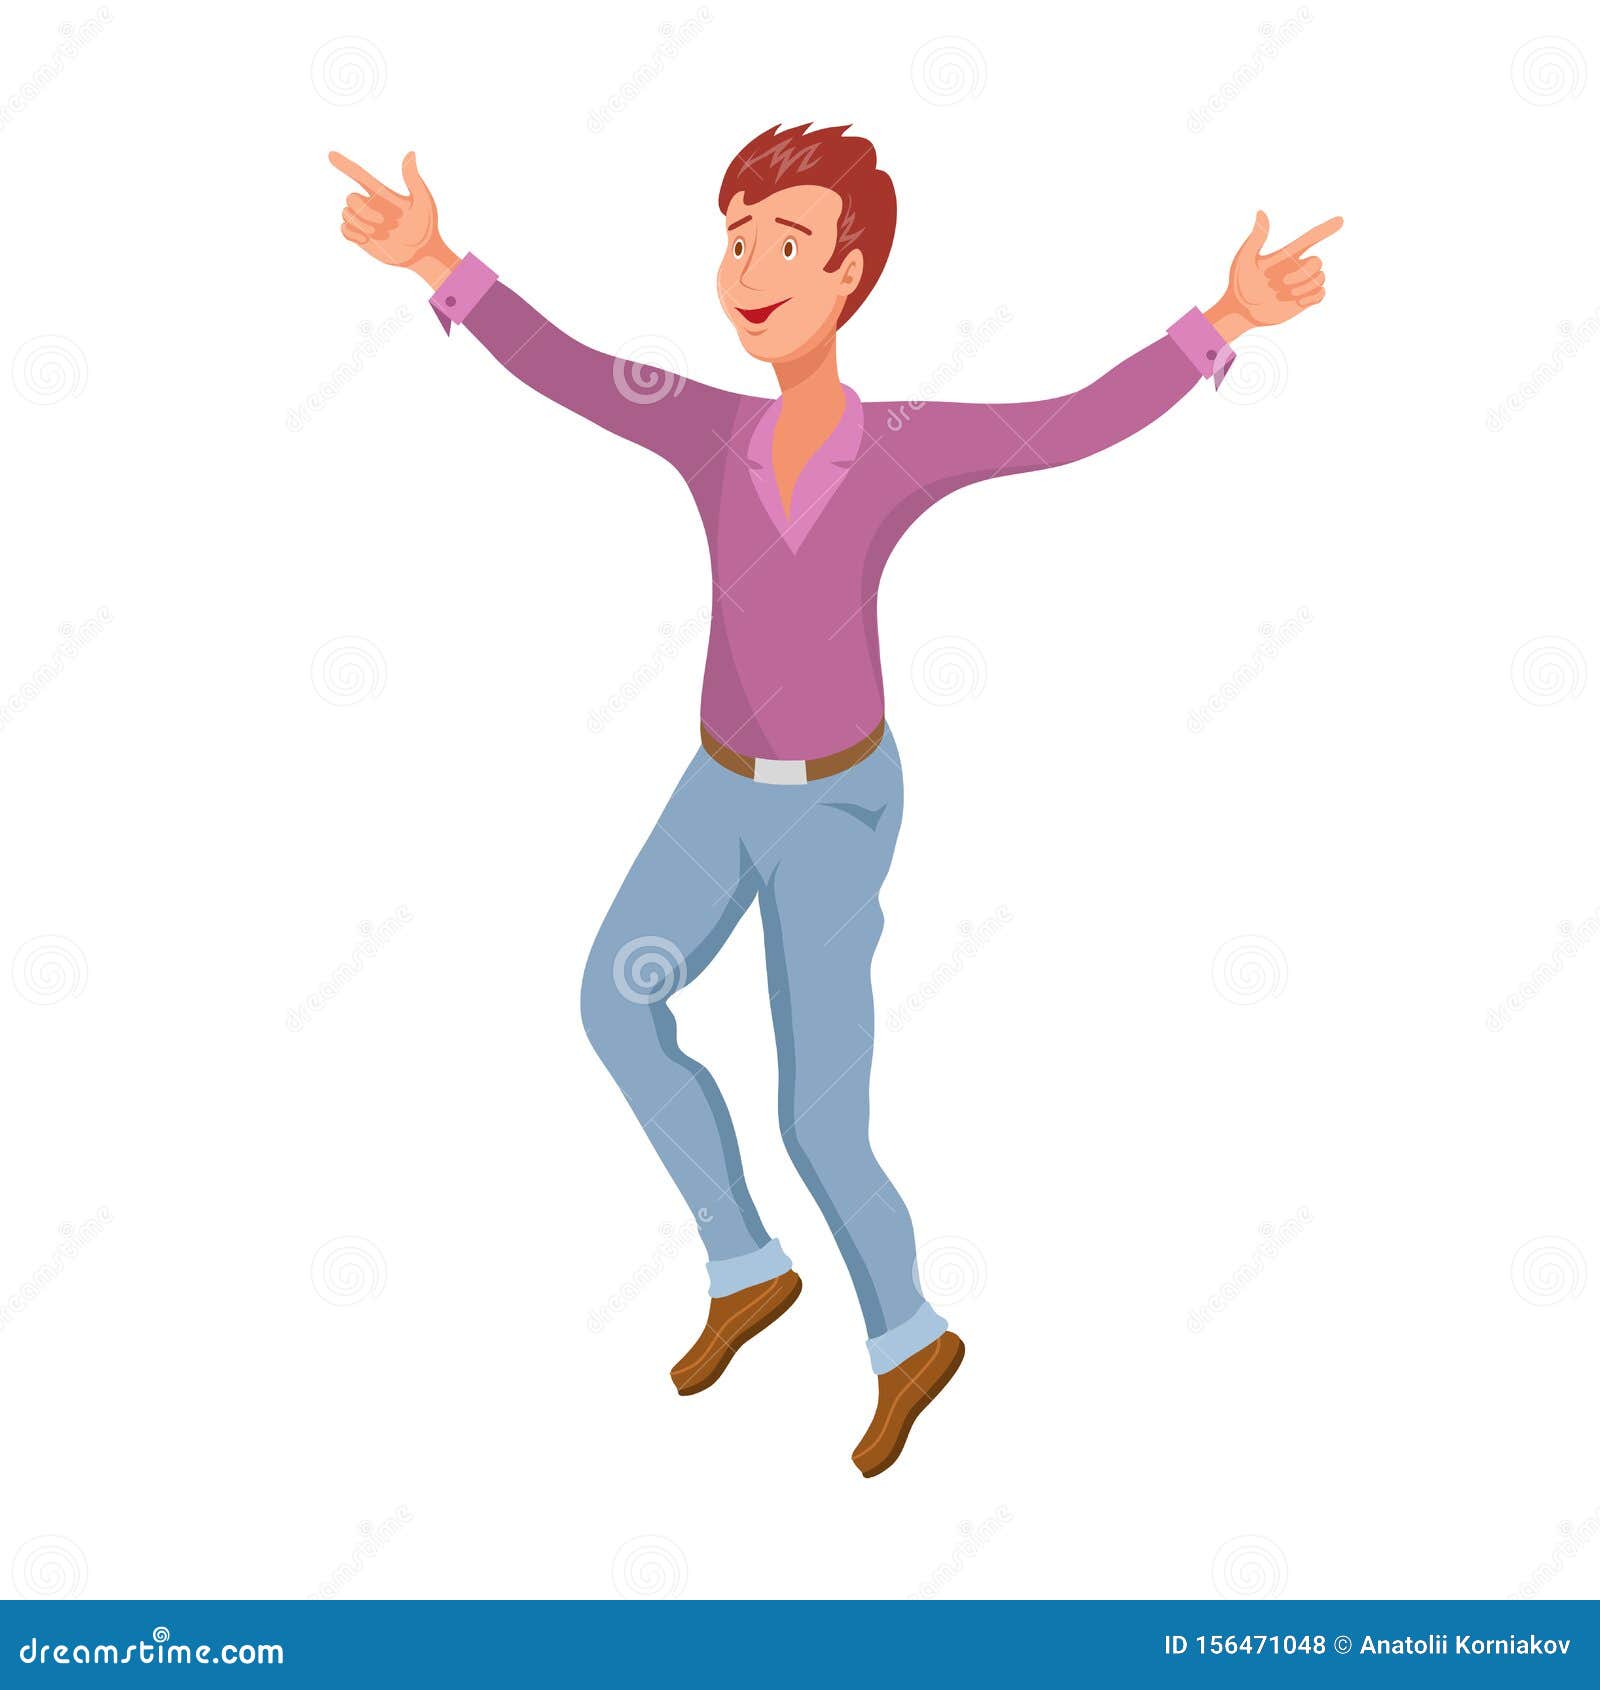 Jumping or Dancing Man. Cartoon Character. Party People. Cheerful Jumping  Man. Smiling Happy Human  Jumping Man Stock Vector -  Illustration of facefashion, crazy: 156471048